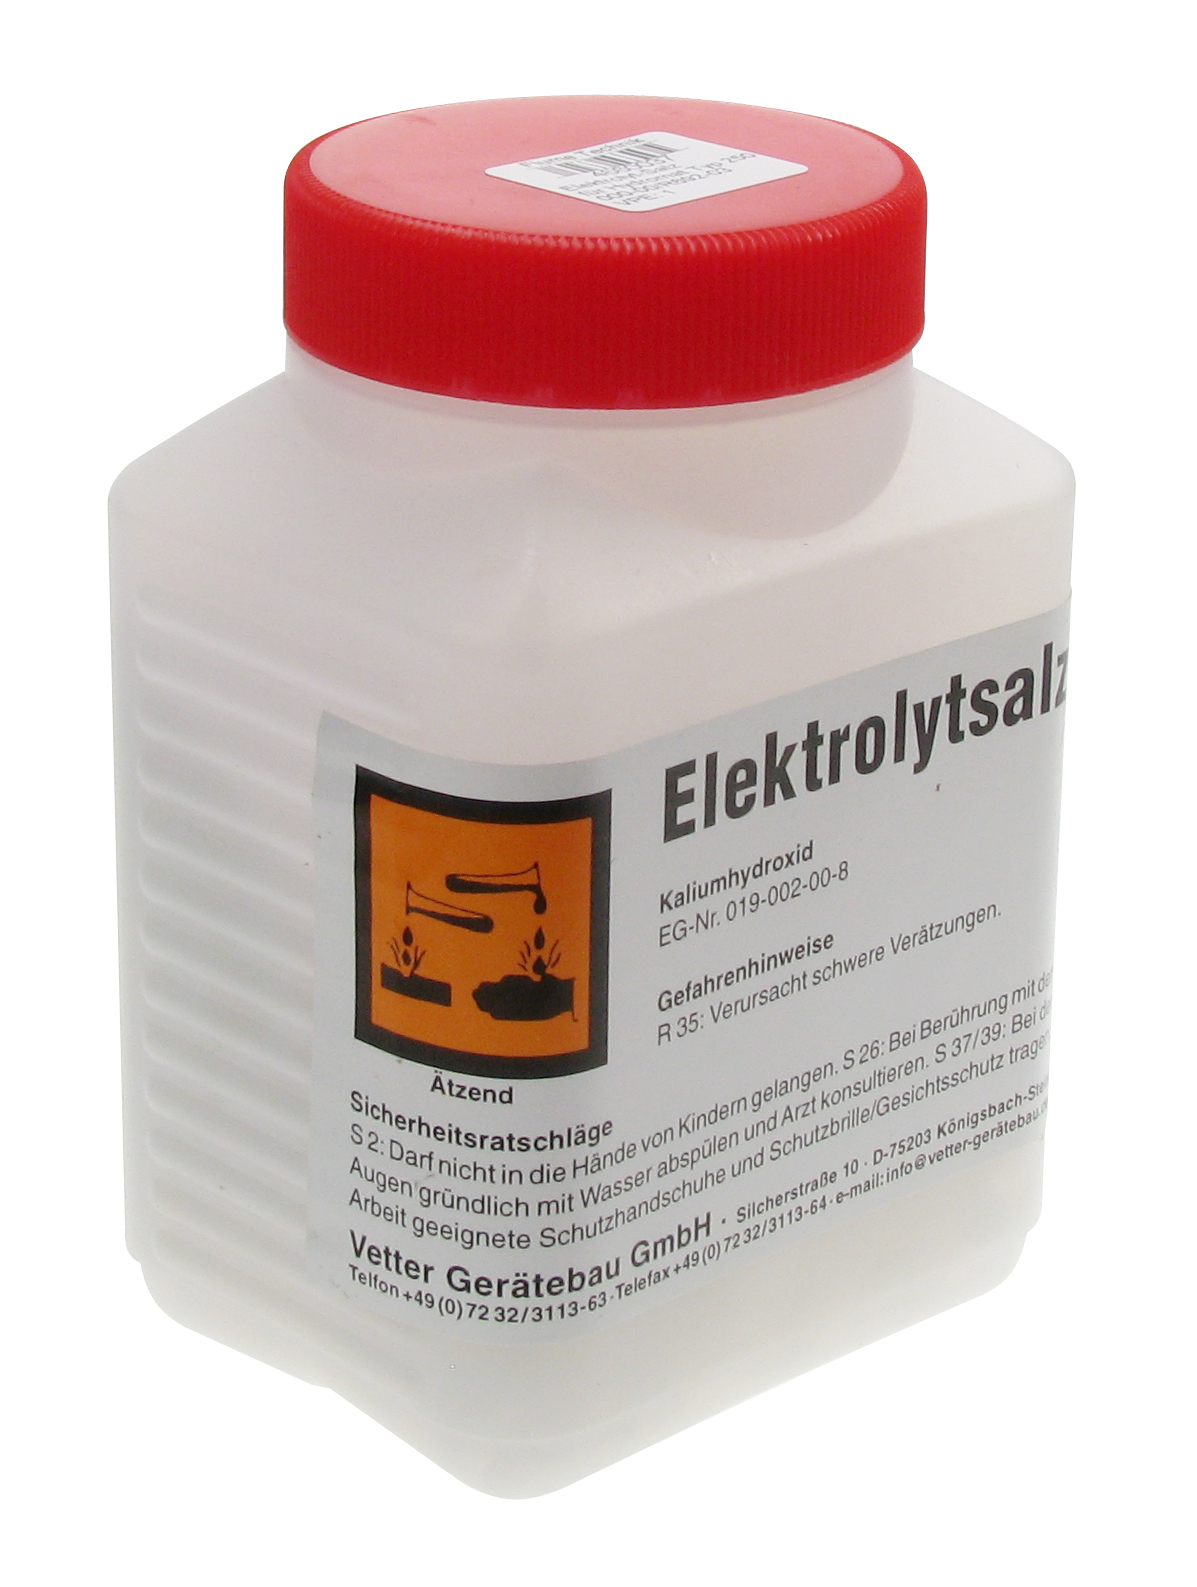 Electrolyte salt for type 250 Hydromat